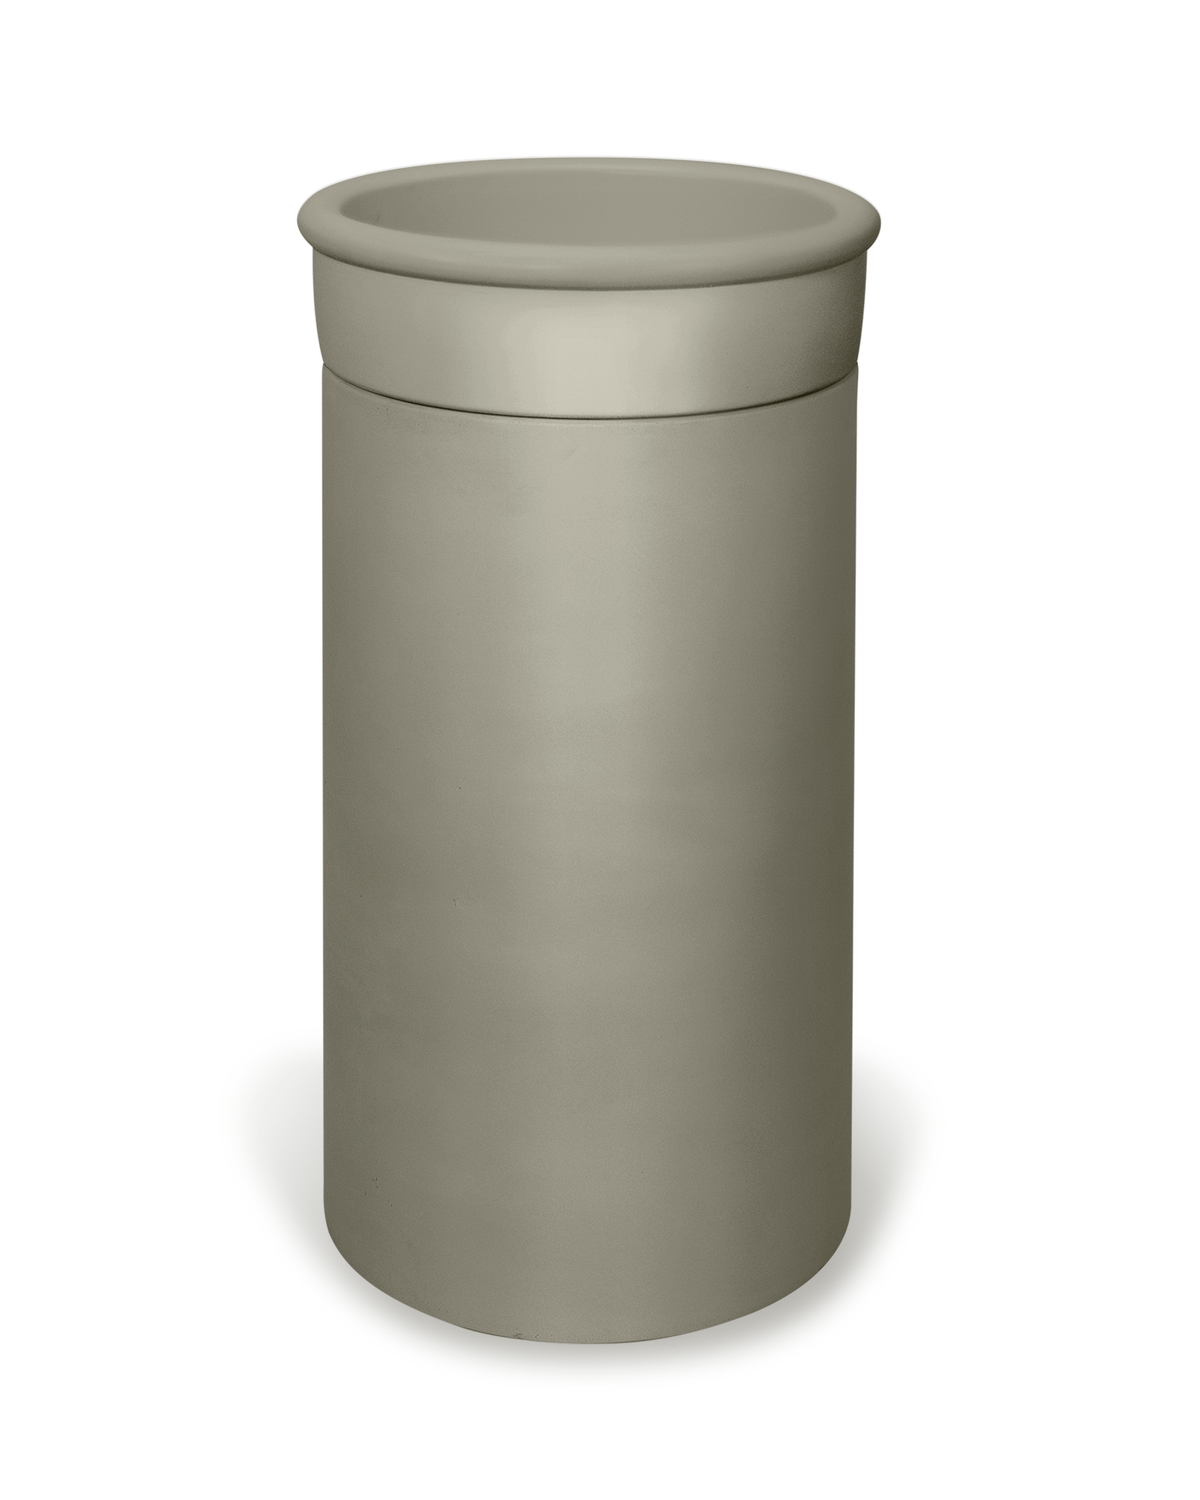 Cylinder - Tubb Basin (Olive)